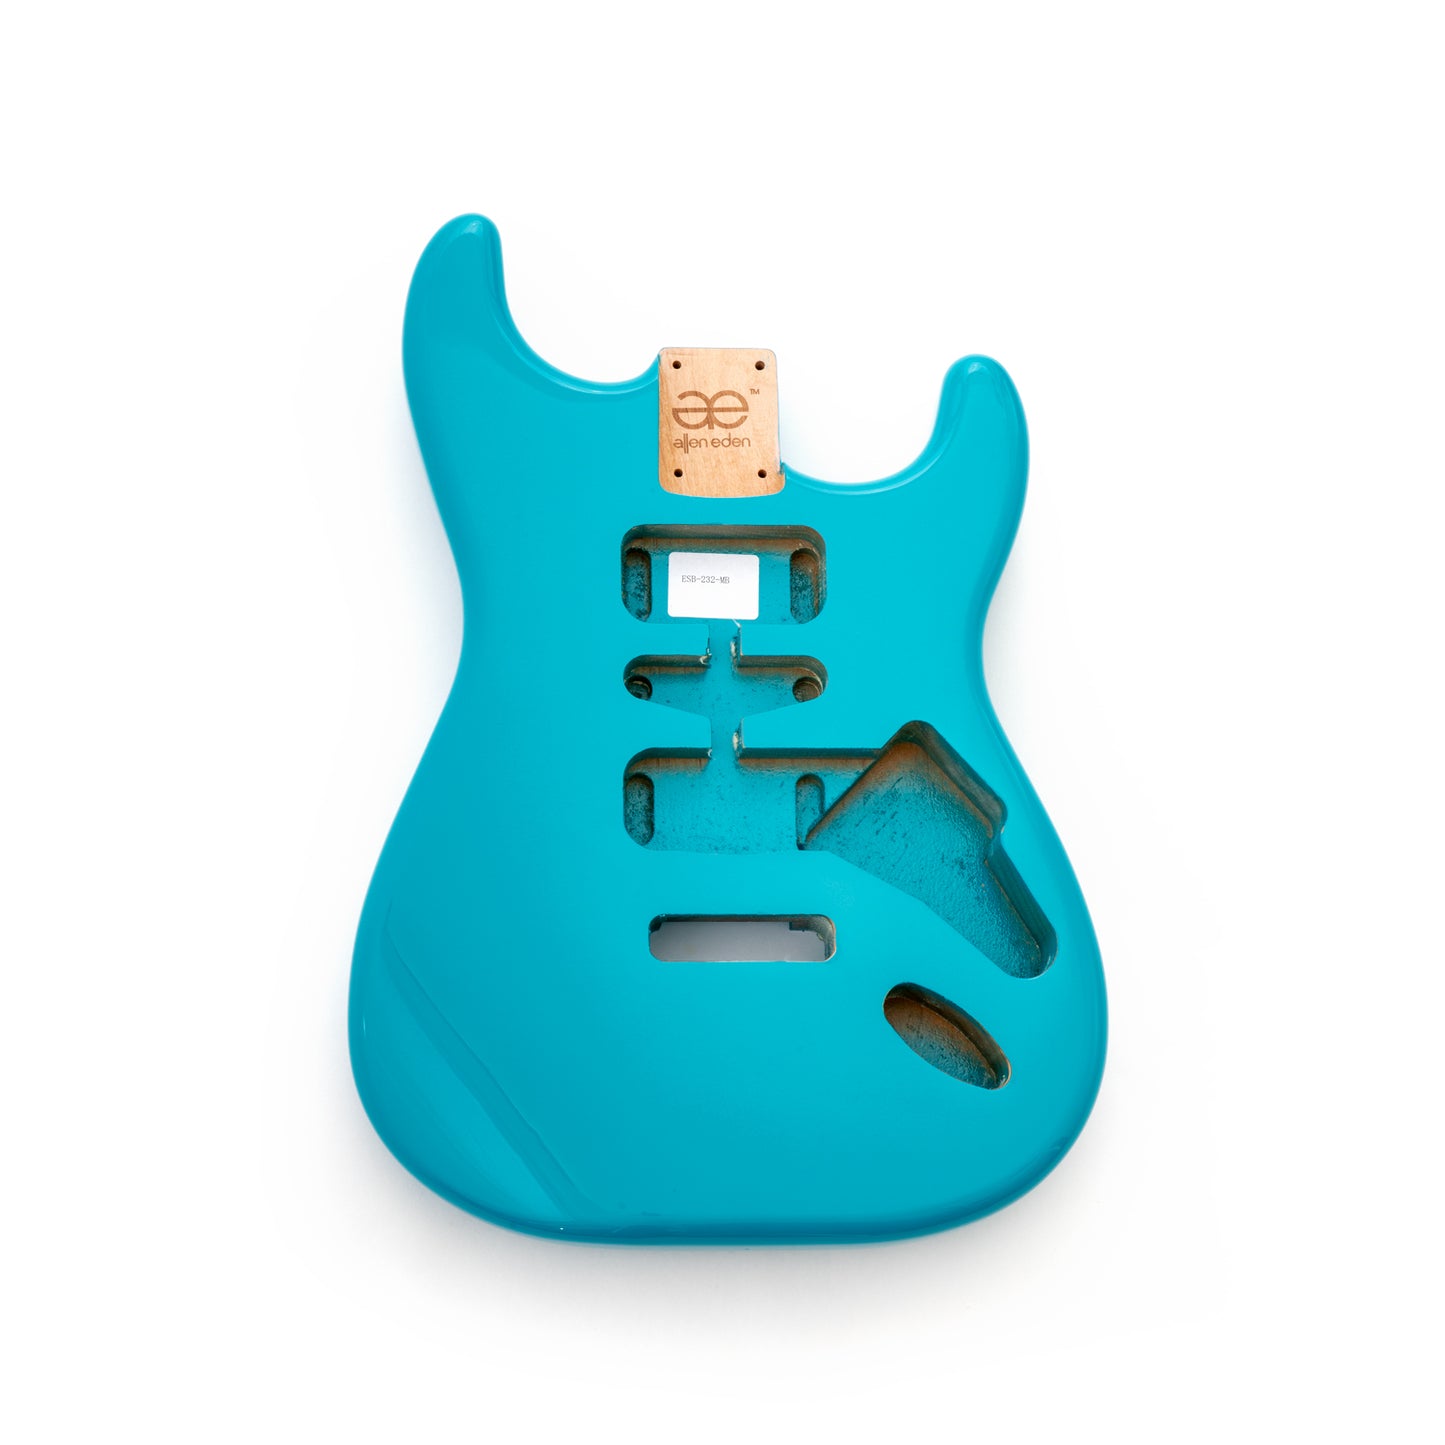 AE Guitars® S-Style Alder Replacement Guitar Body Miami Blue